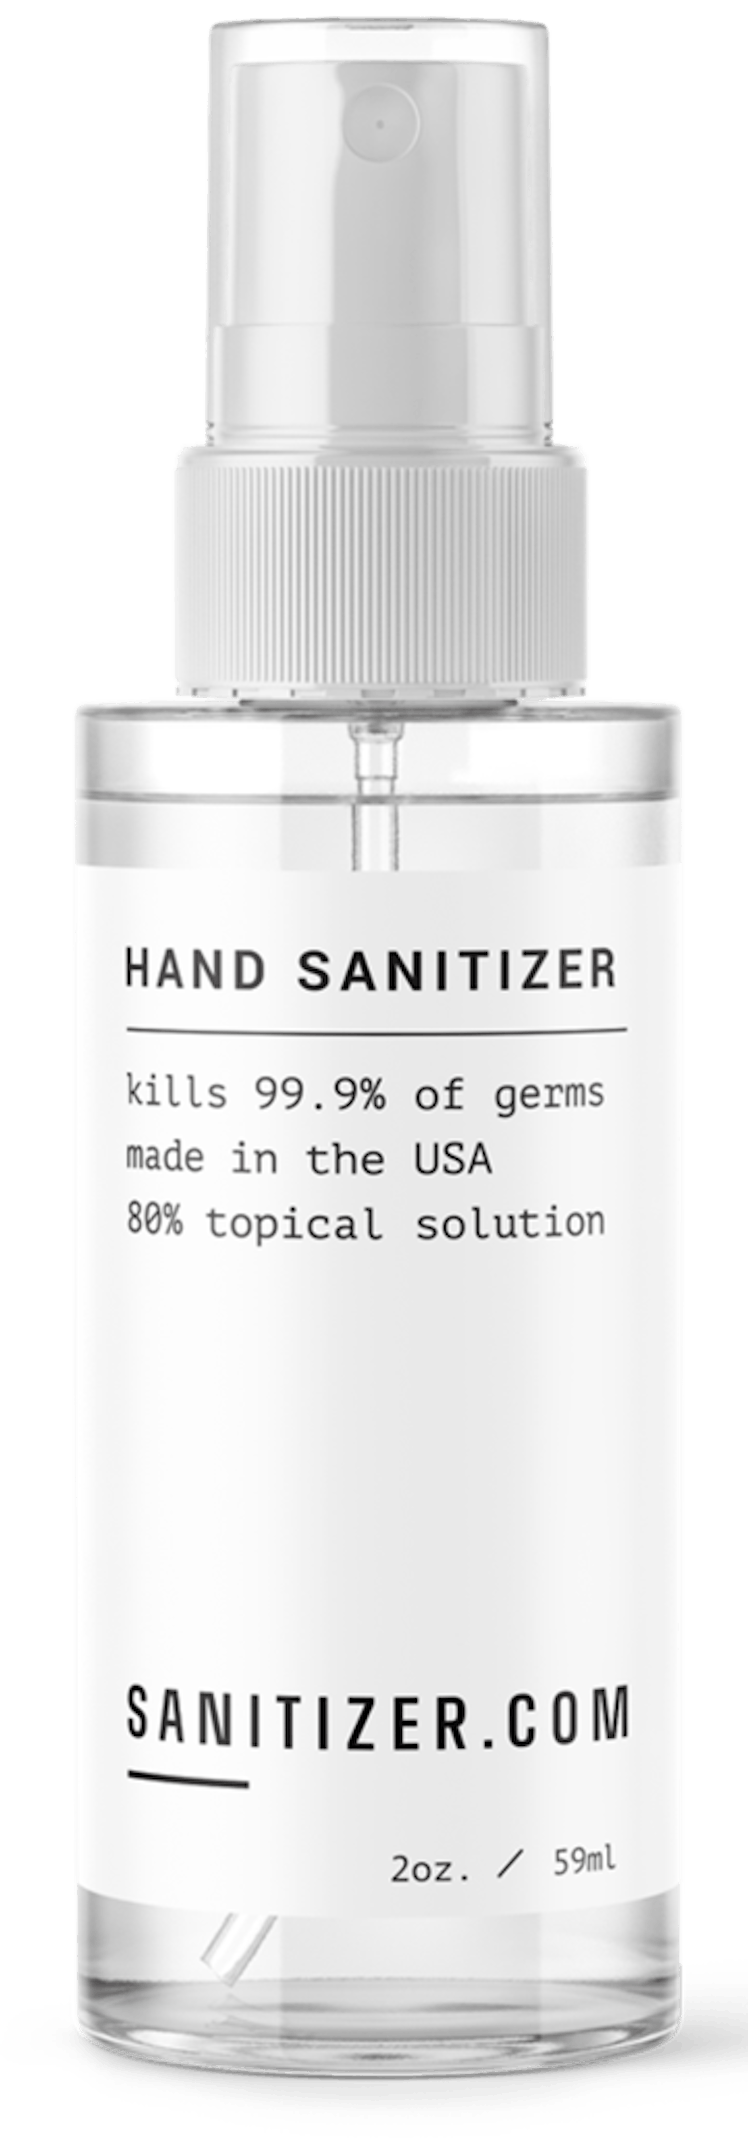 Hand Sanitizer Subscription Service by Sanitizer.com